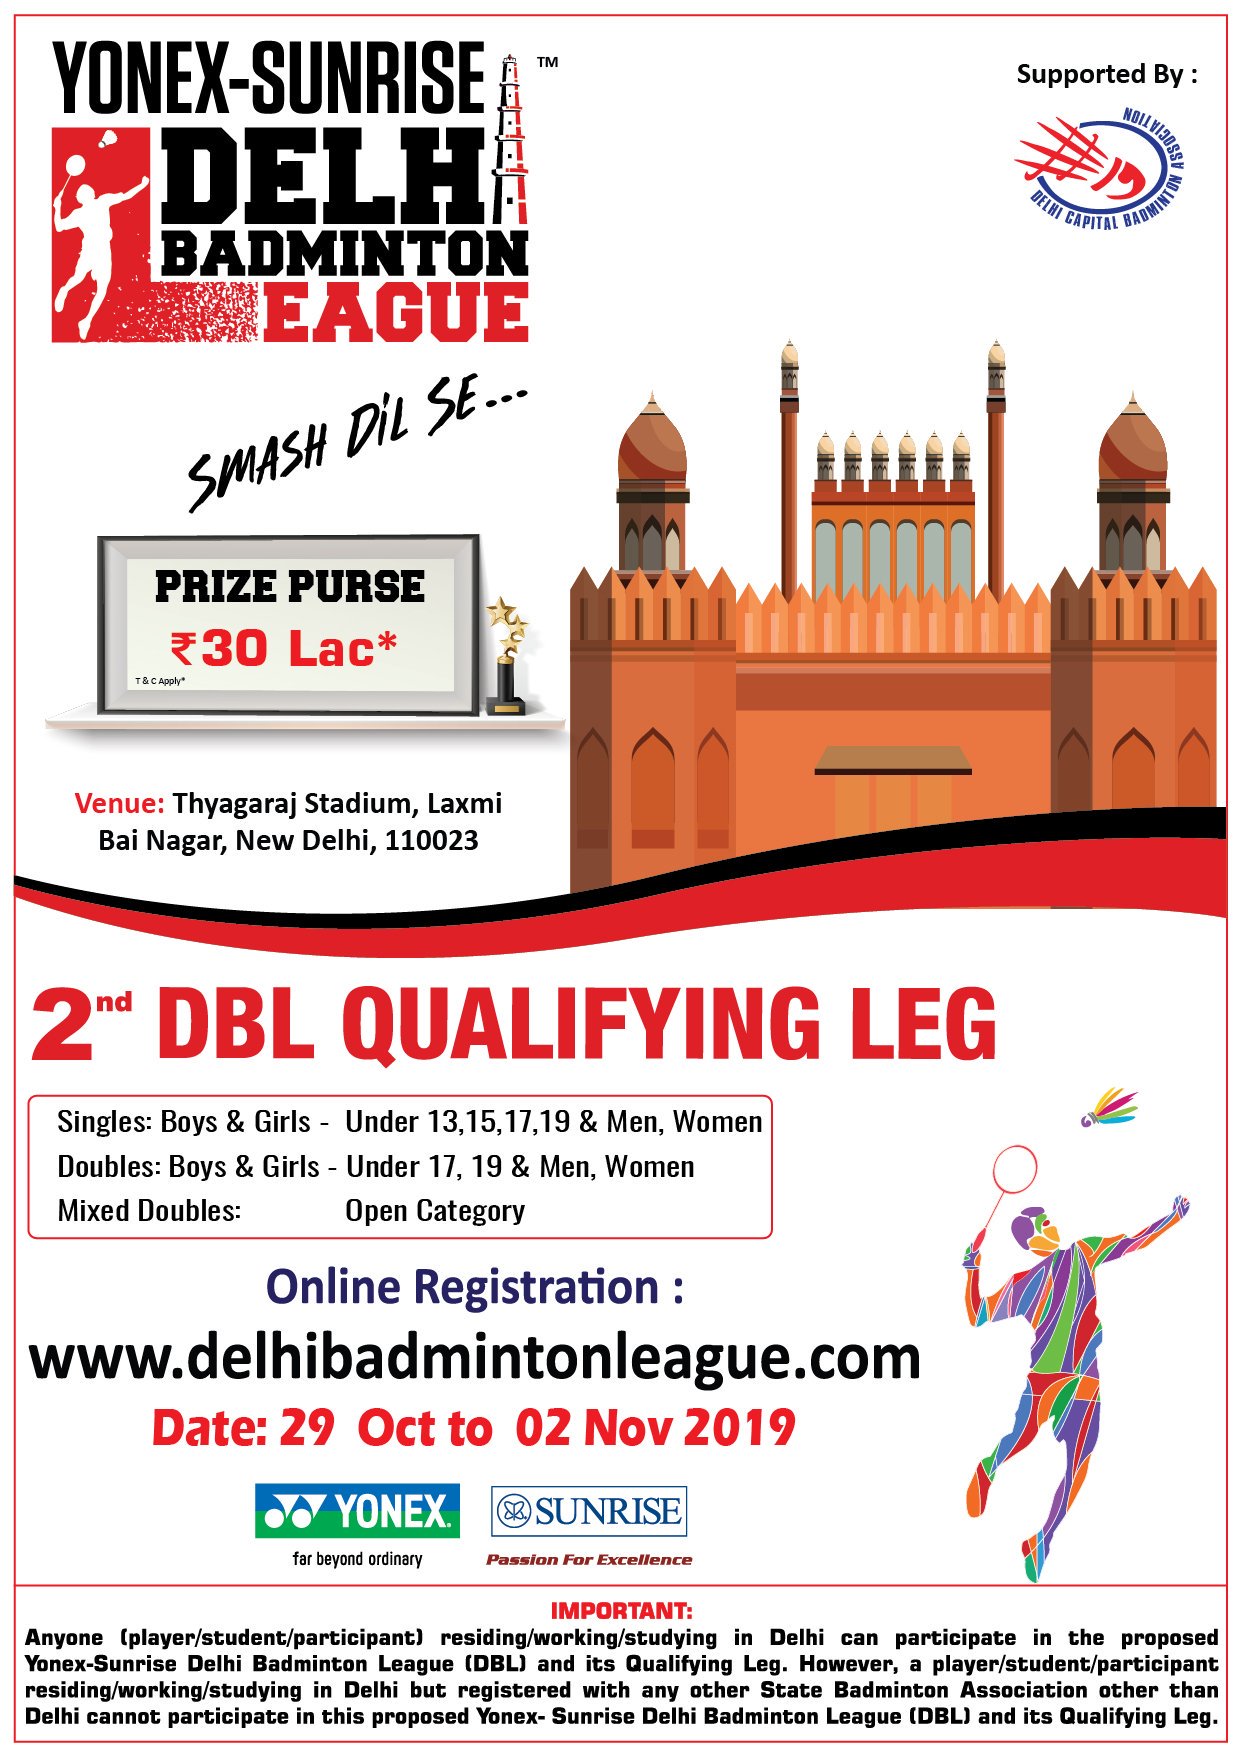 Delhi Badminton League on Twitter